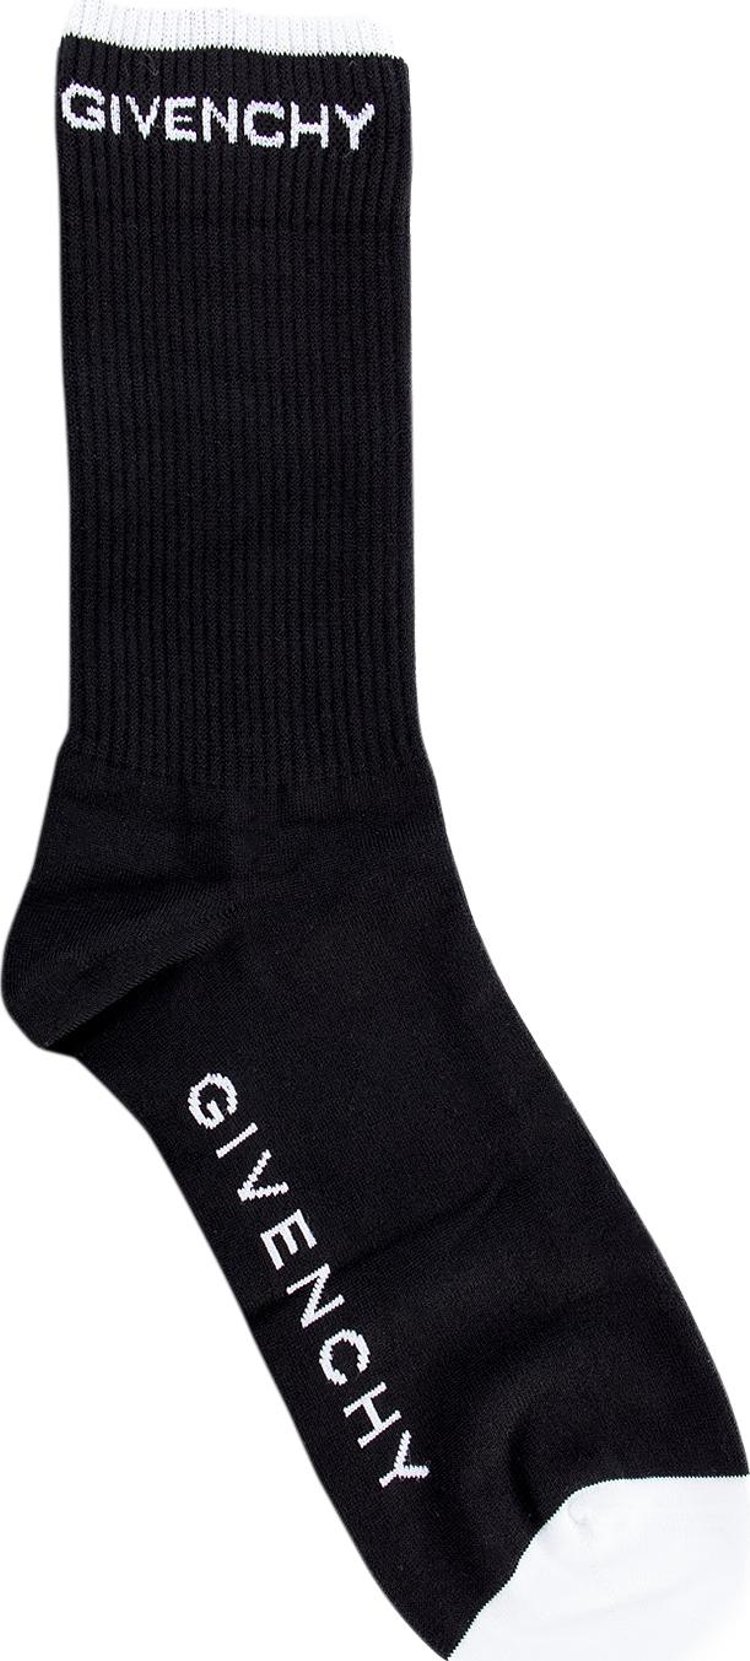 Givenchy 4G Socks 'Black/White'